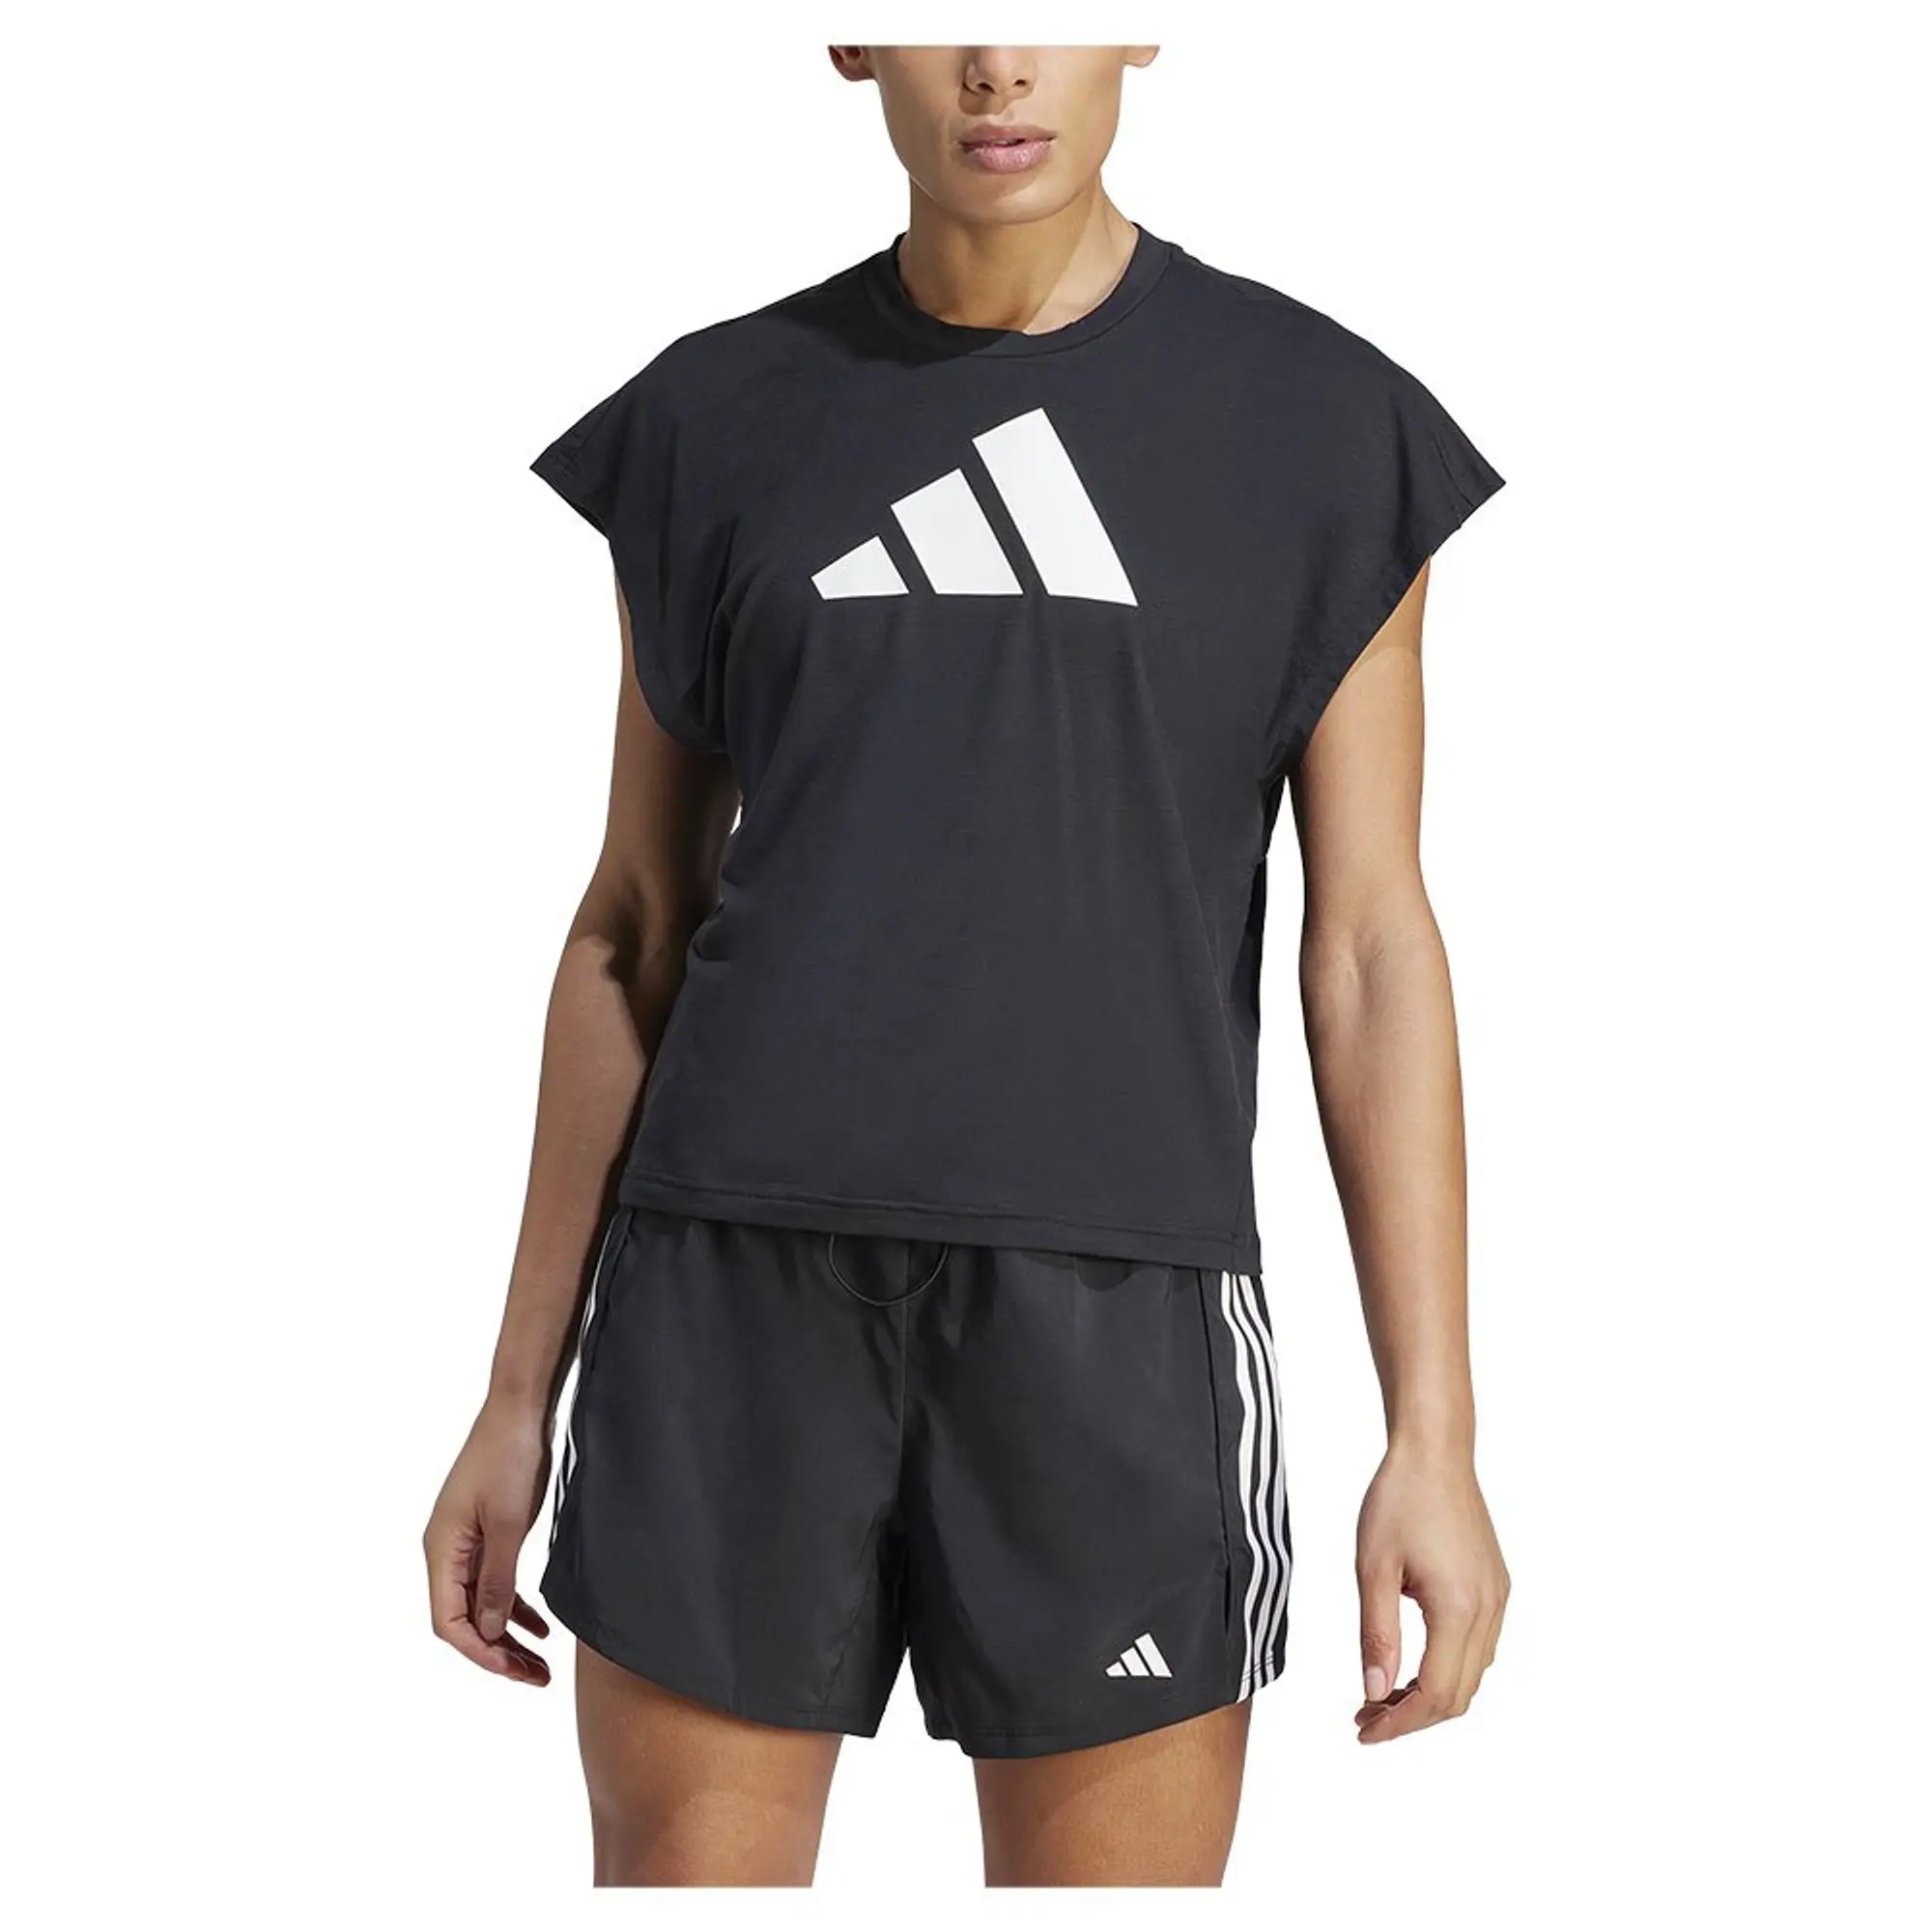 adidas Women's Performance T-shirt (short Sleeve) - BLACK/WHITE, Black/White